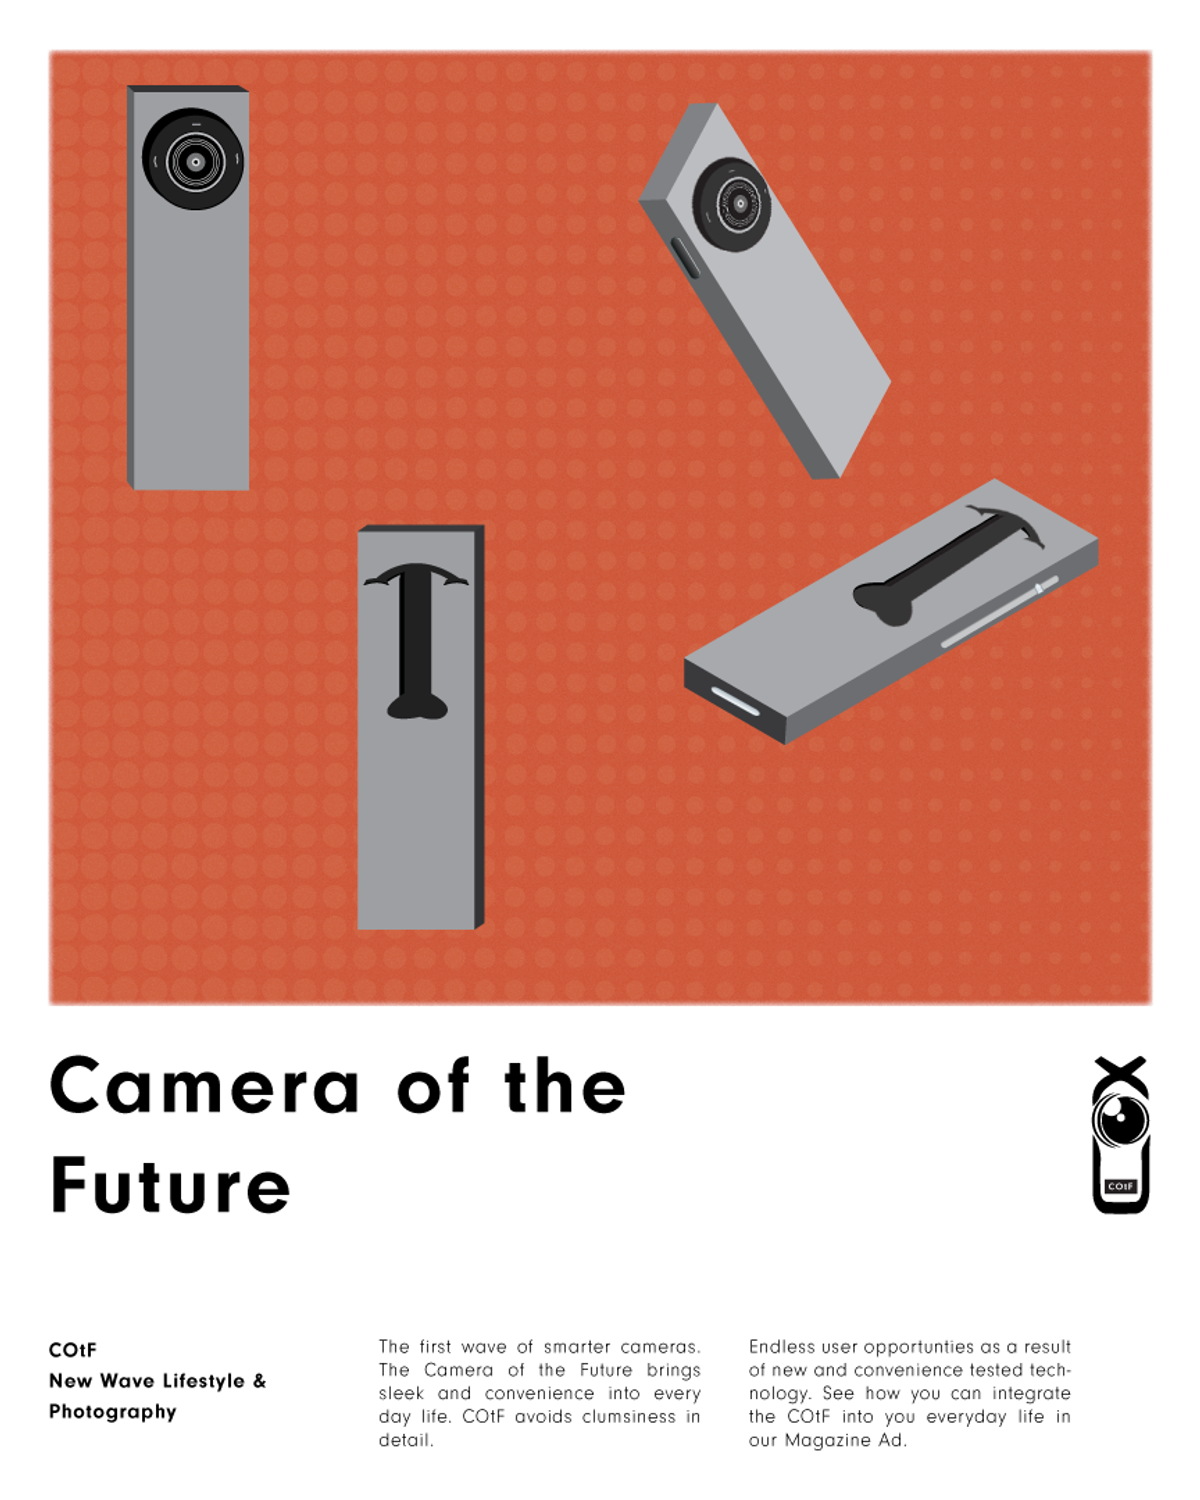 Camera of the Future advertisement